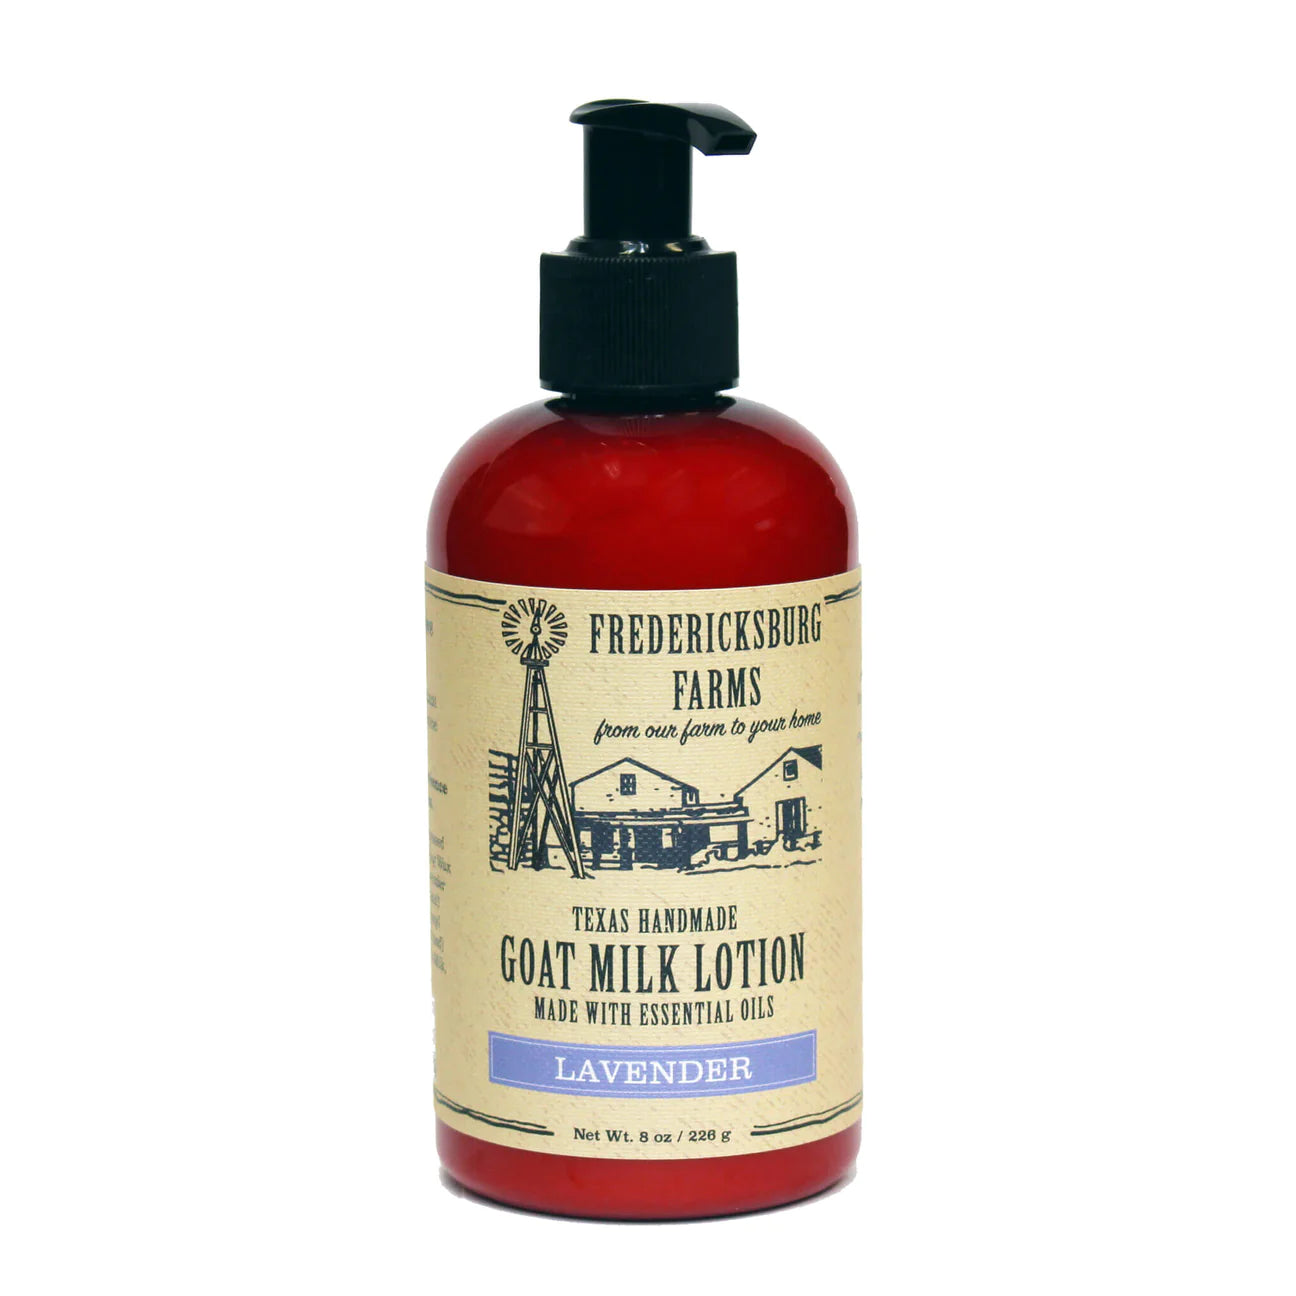 Fredericksburg Farms Goat Milk Lotion - Lavender